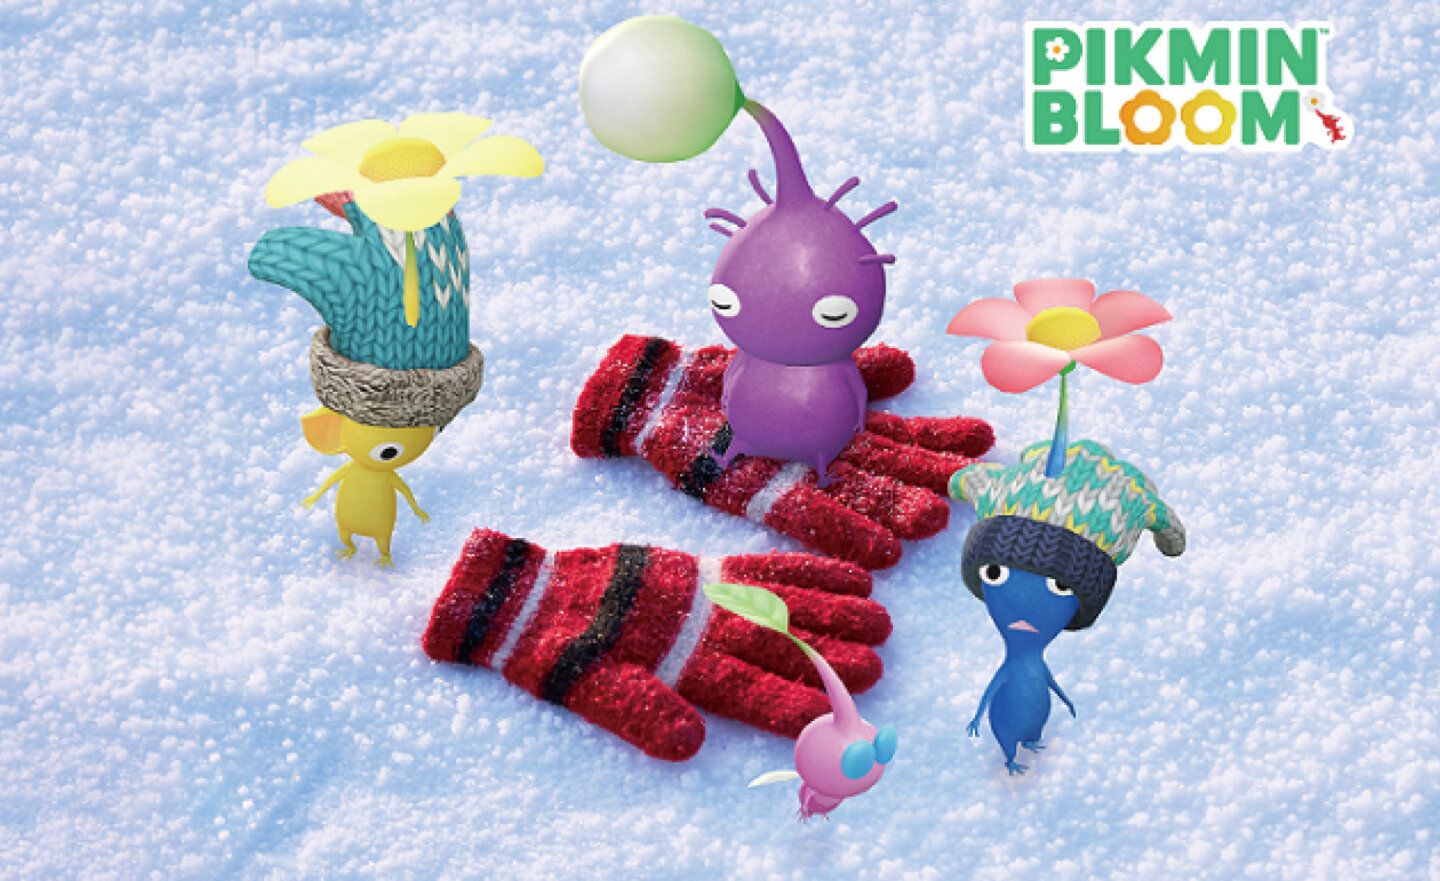 Pikmin Bloom 公布 12 月佳節活動，皮克敏也戴上手套跟圍巾保暖了